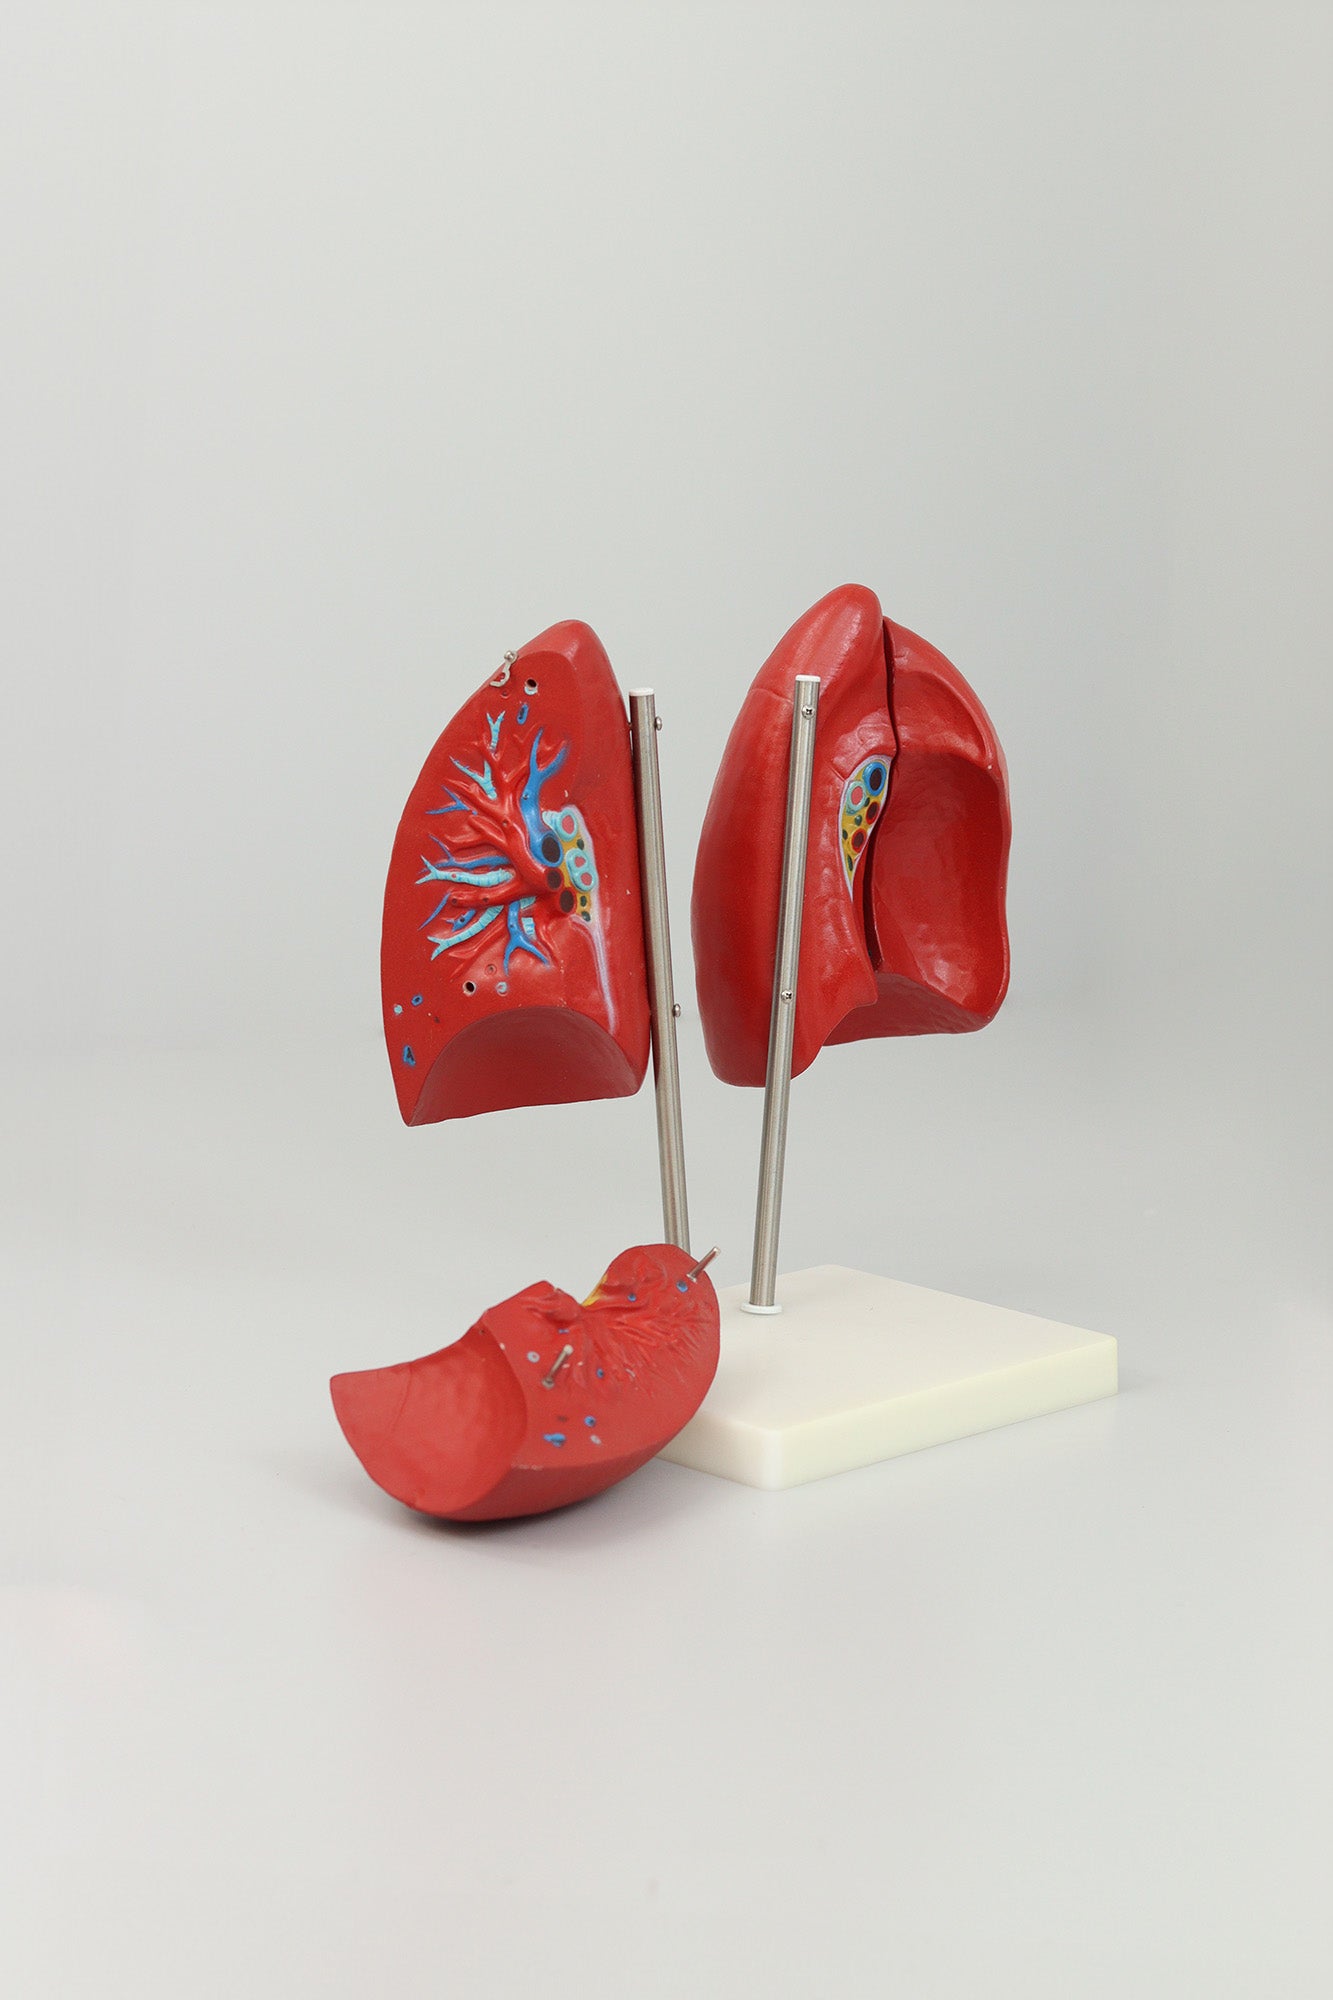 Lung Anatomy Model